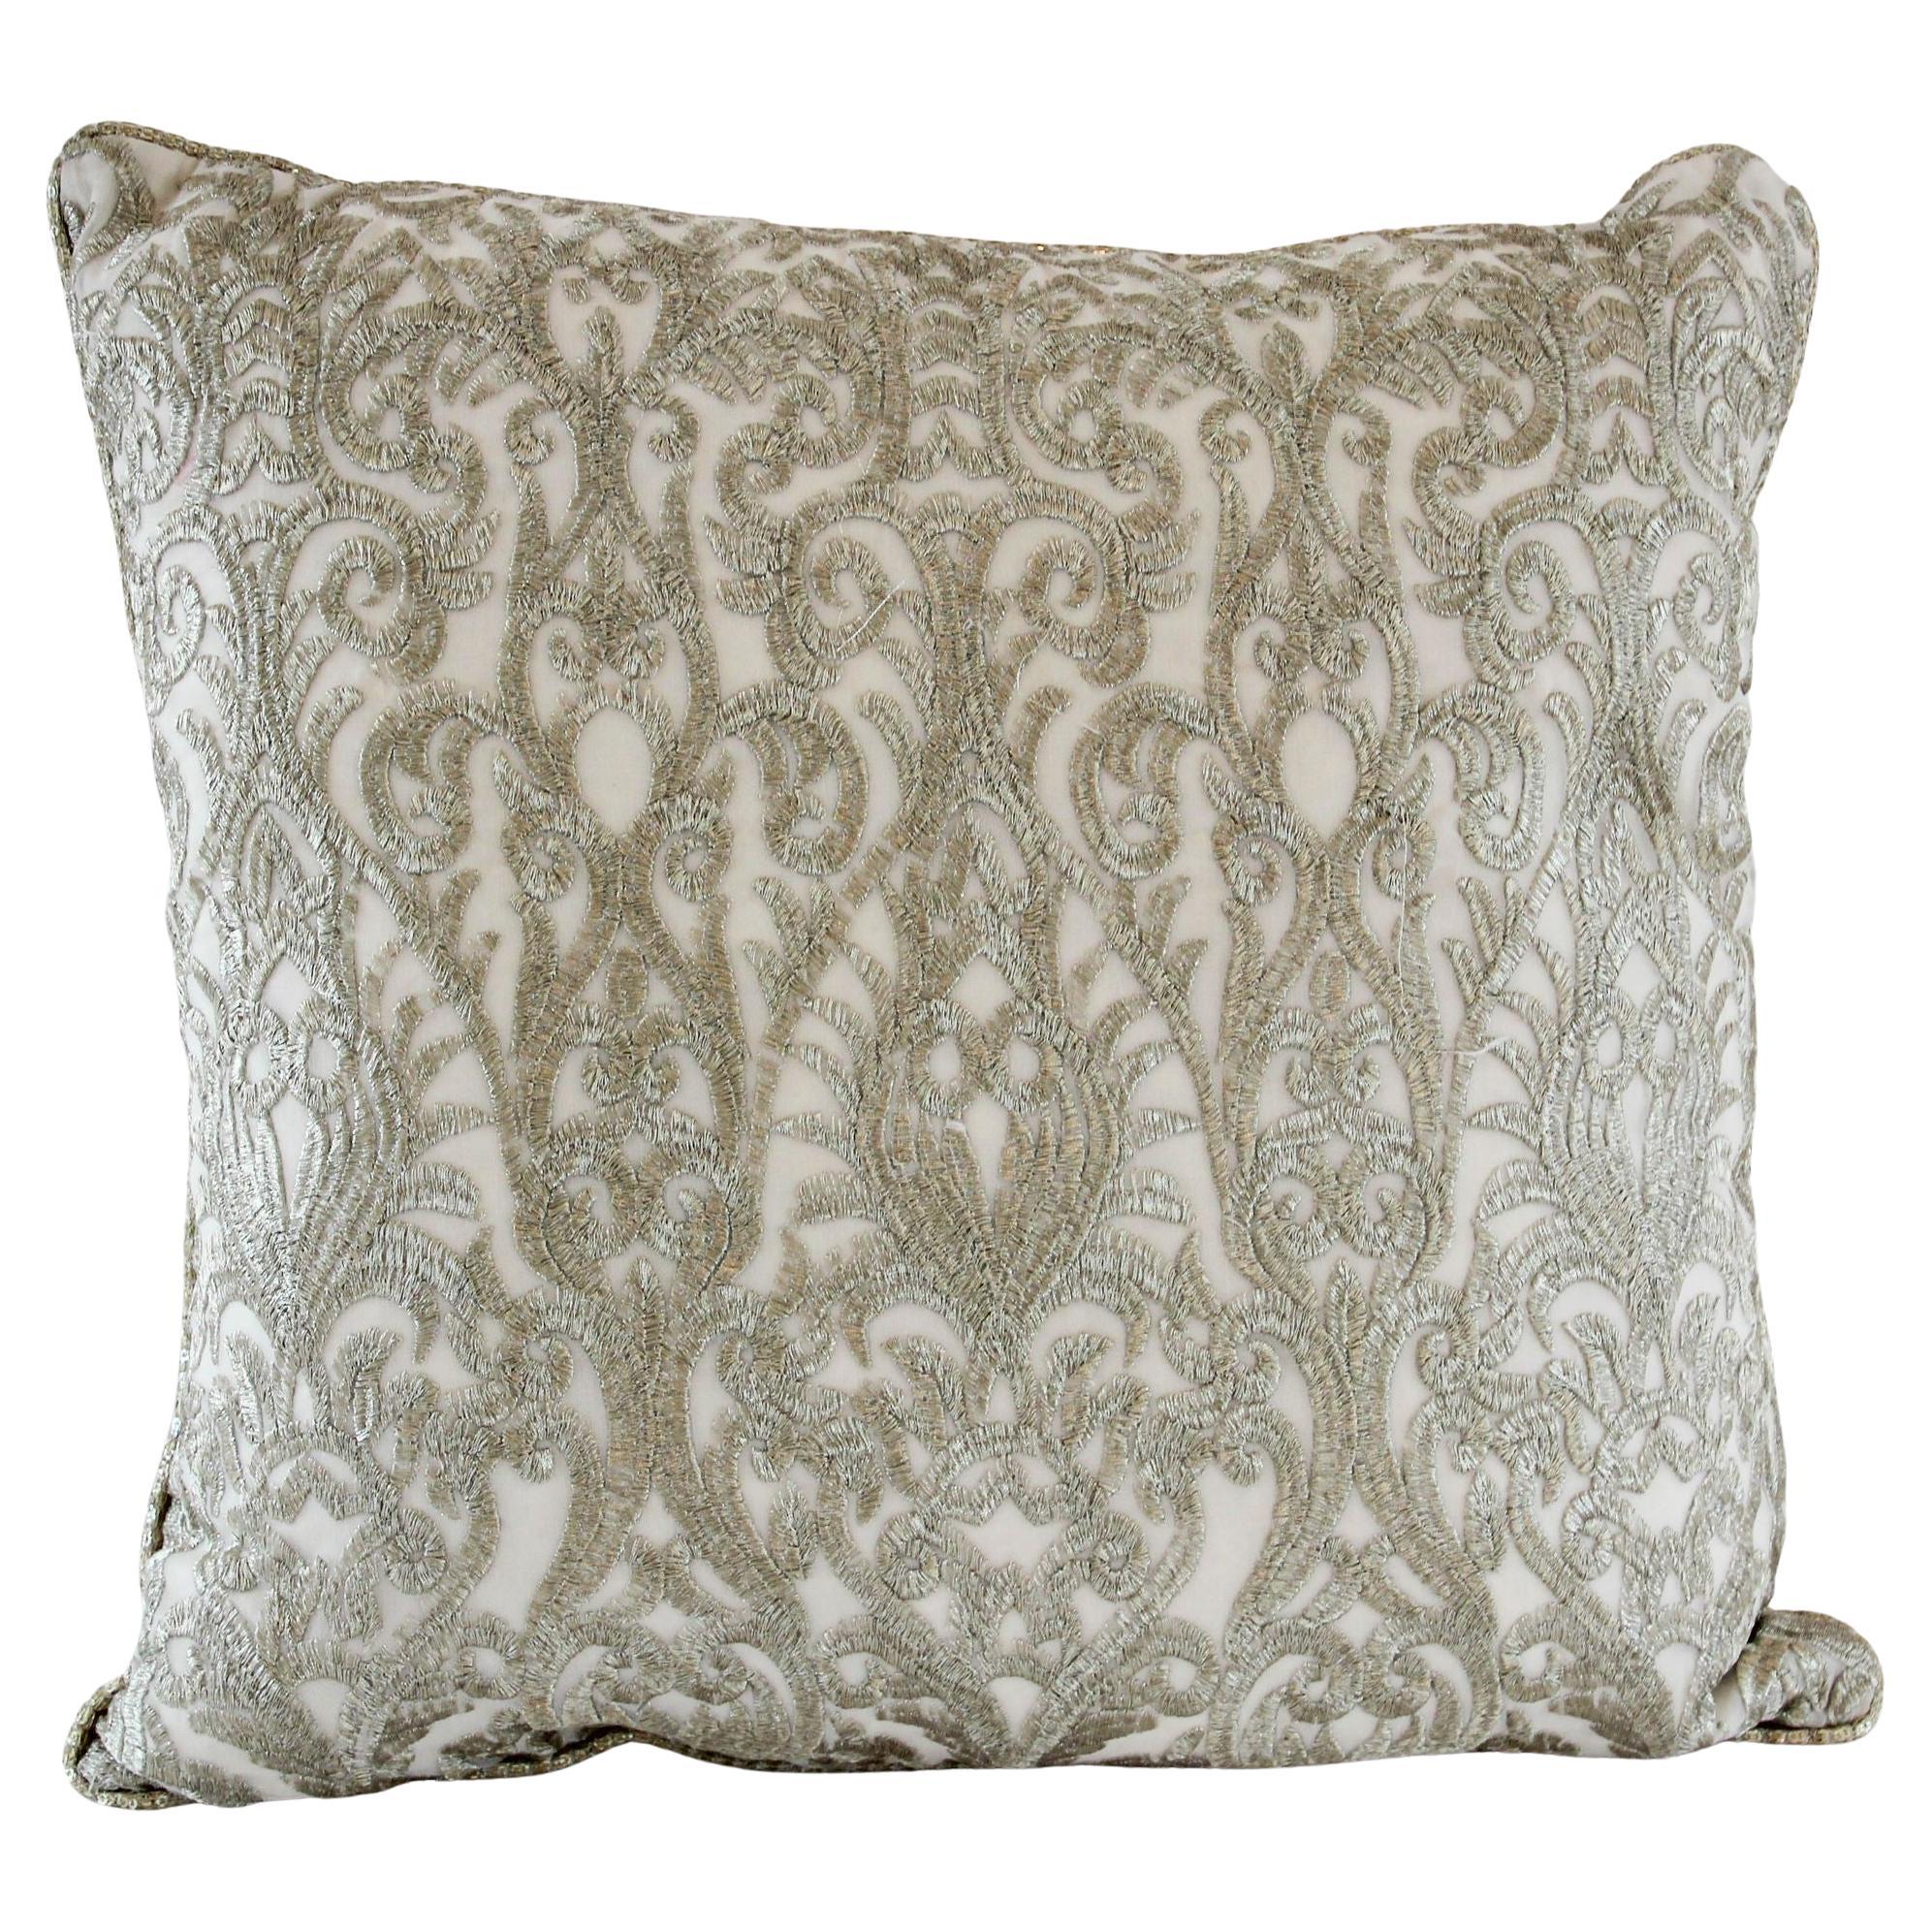 Turkish Moorish Ottoman Style Throw Pillow with Silver Metallic Embroidery For Sale